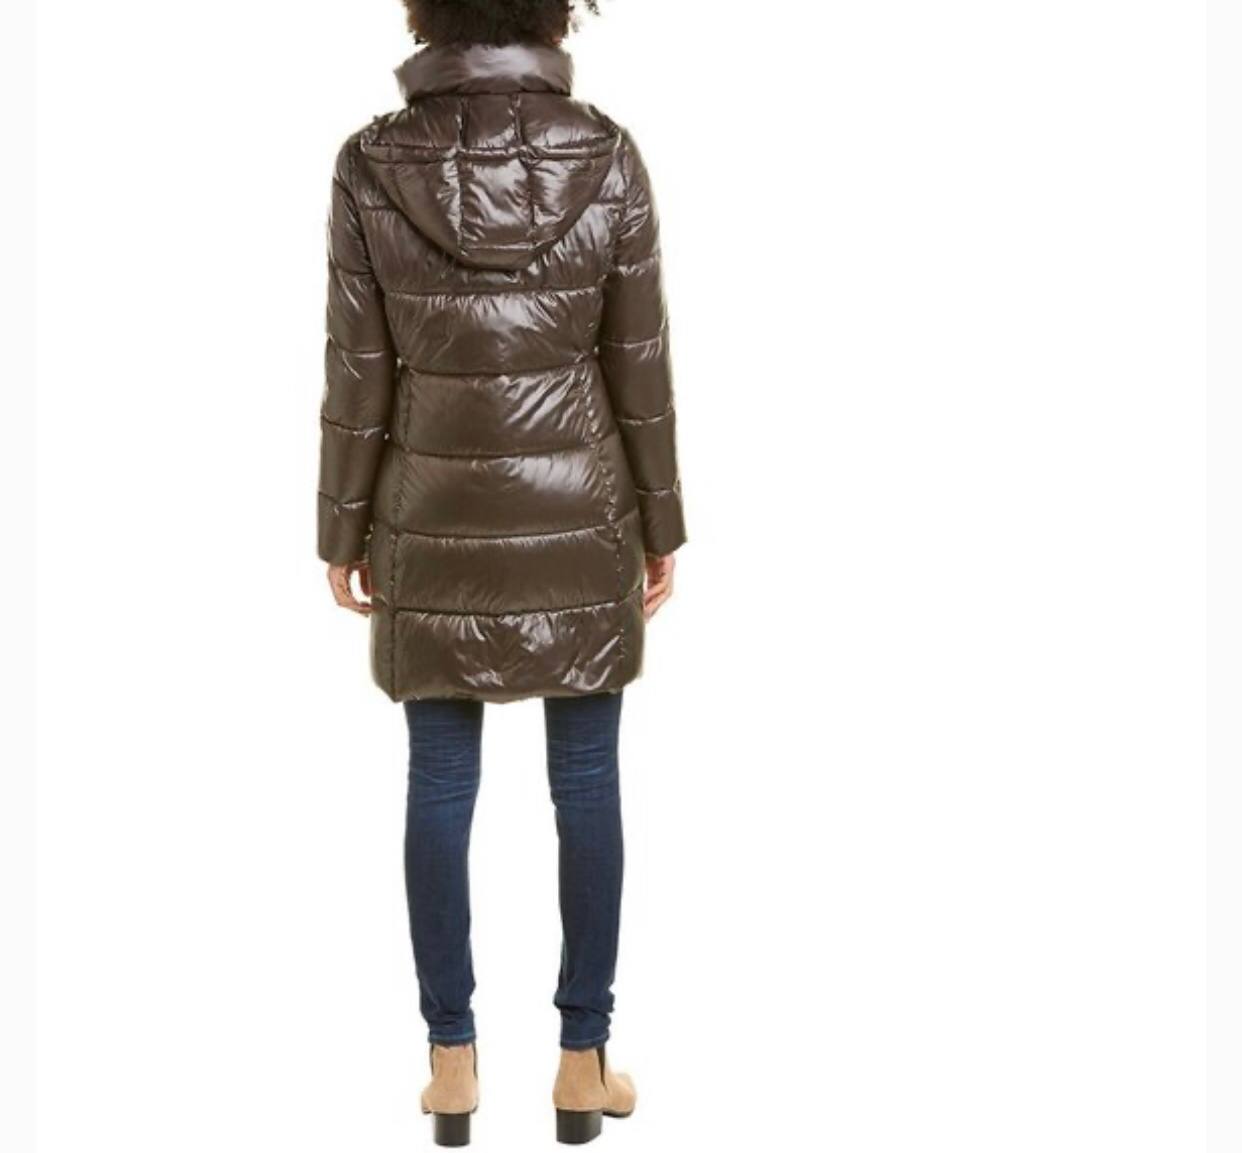 Donna Karan coat